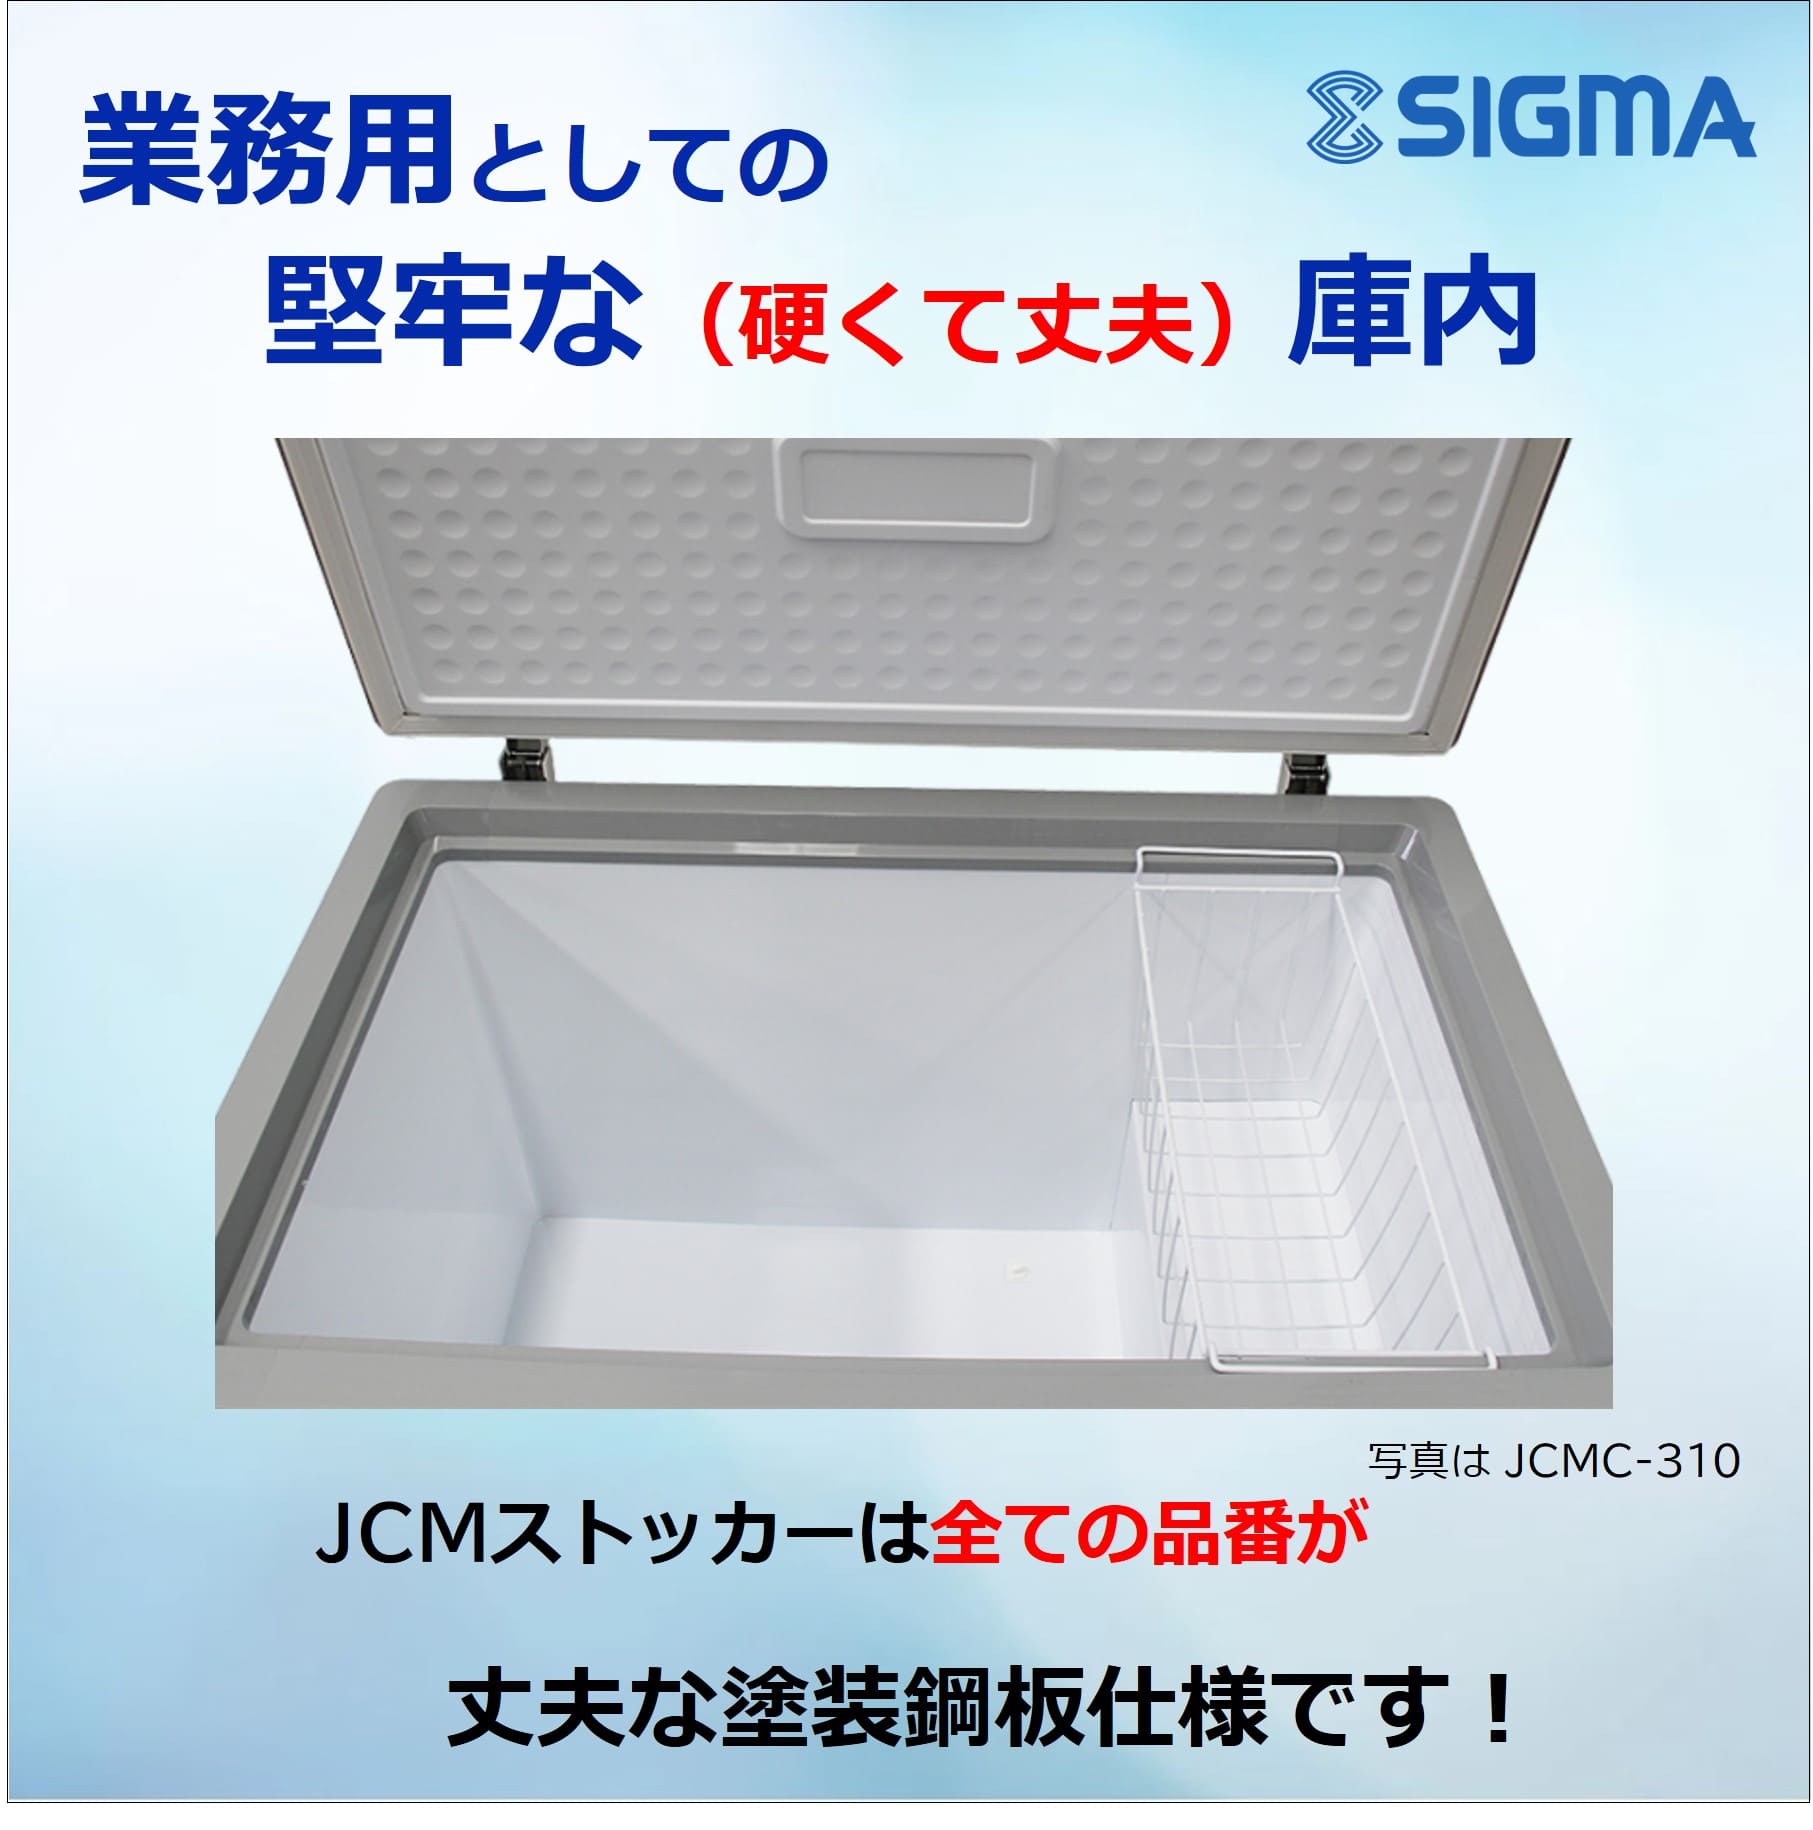 JCMC-310D 冷凍ストッカー／
幅1104×奥行743×高さ852mm